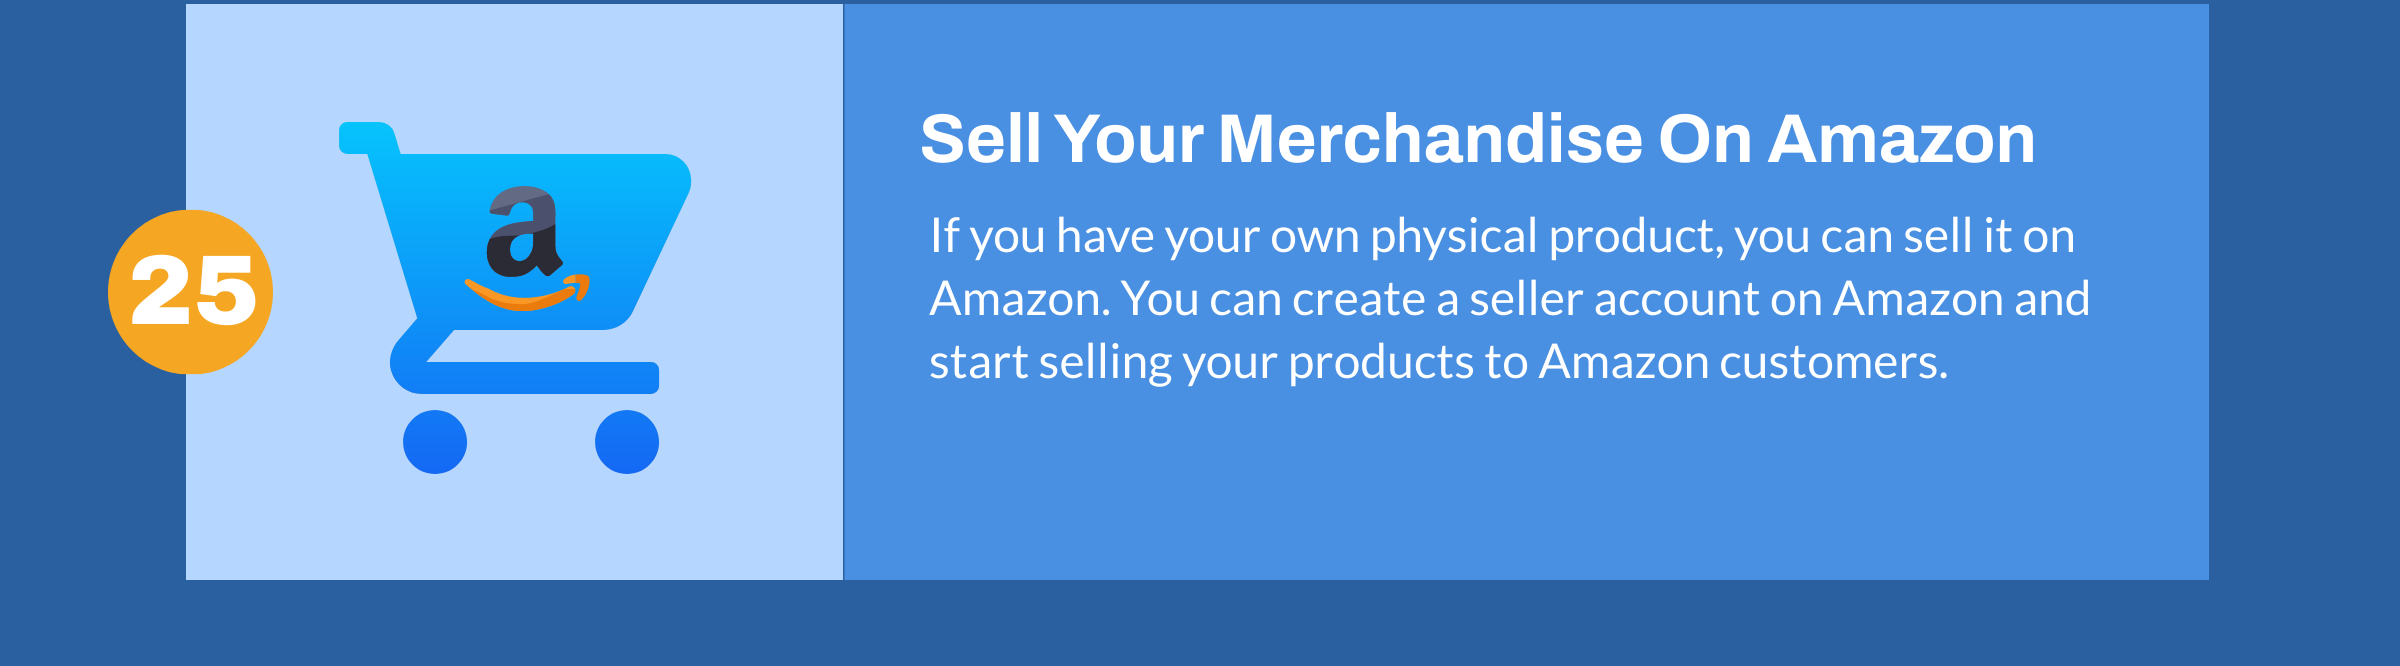 Sell Merchandise on Amazon